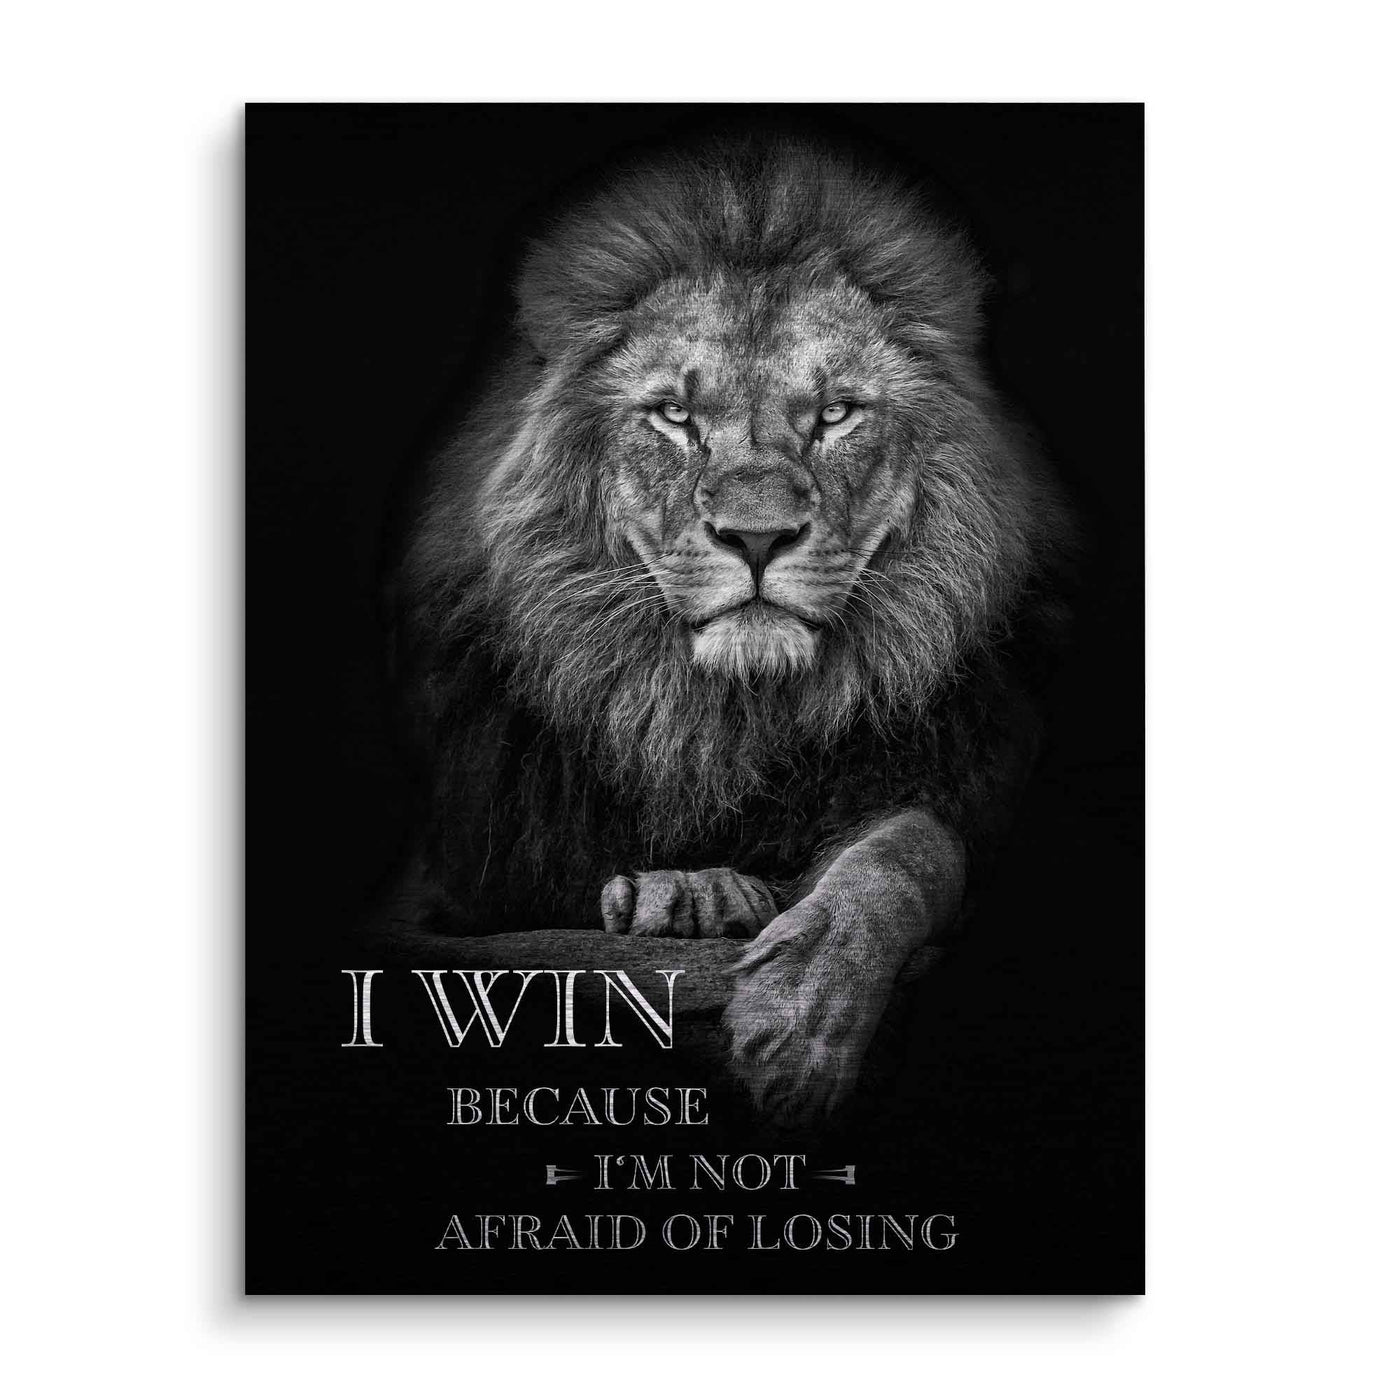 I win - not afraid of losing